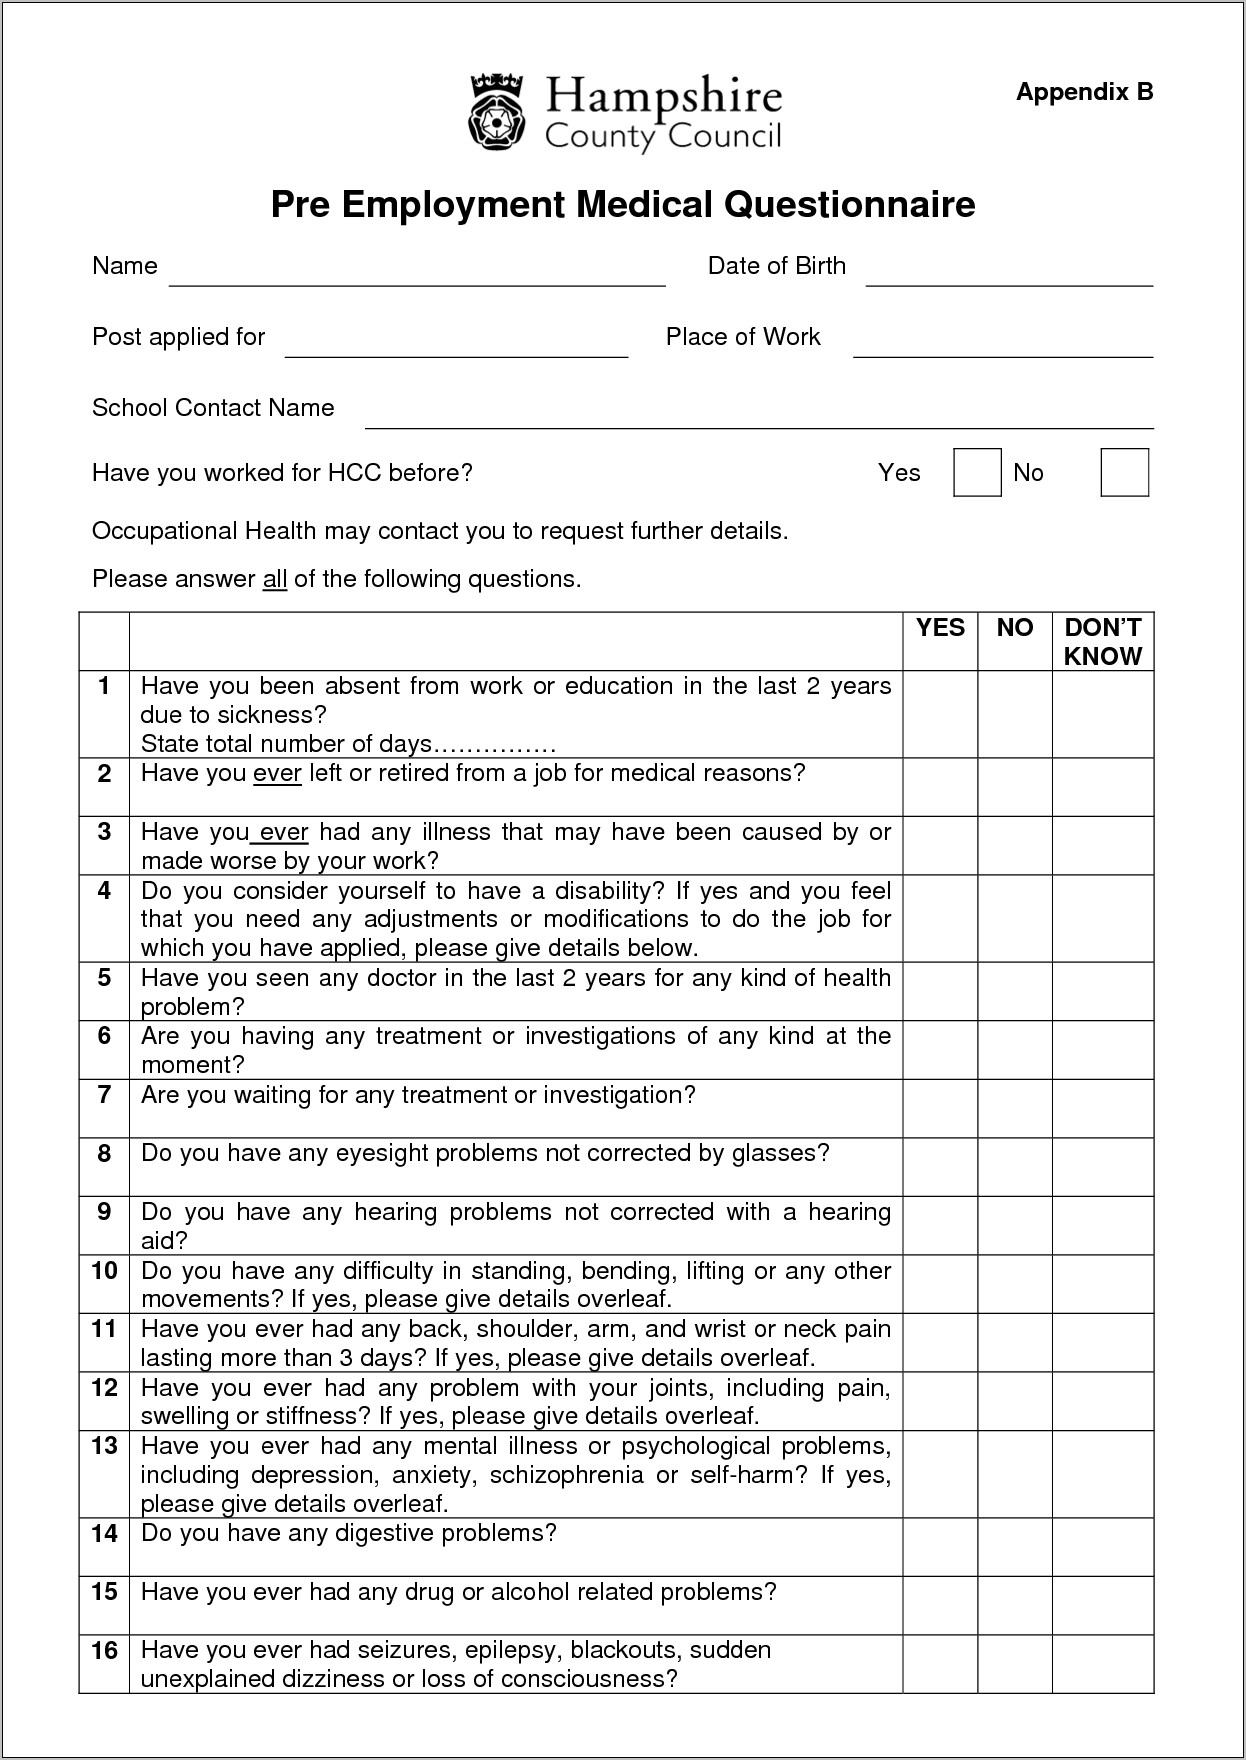 Pre Employment Medical Questionnaire Sample